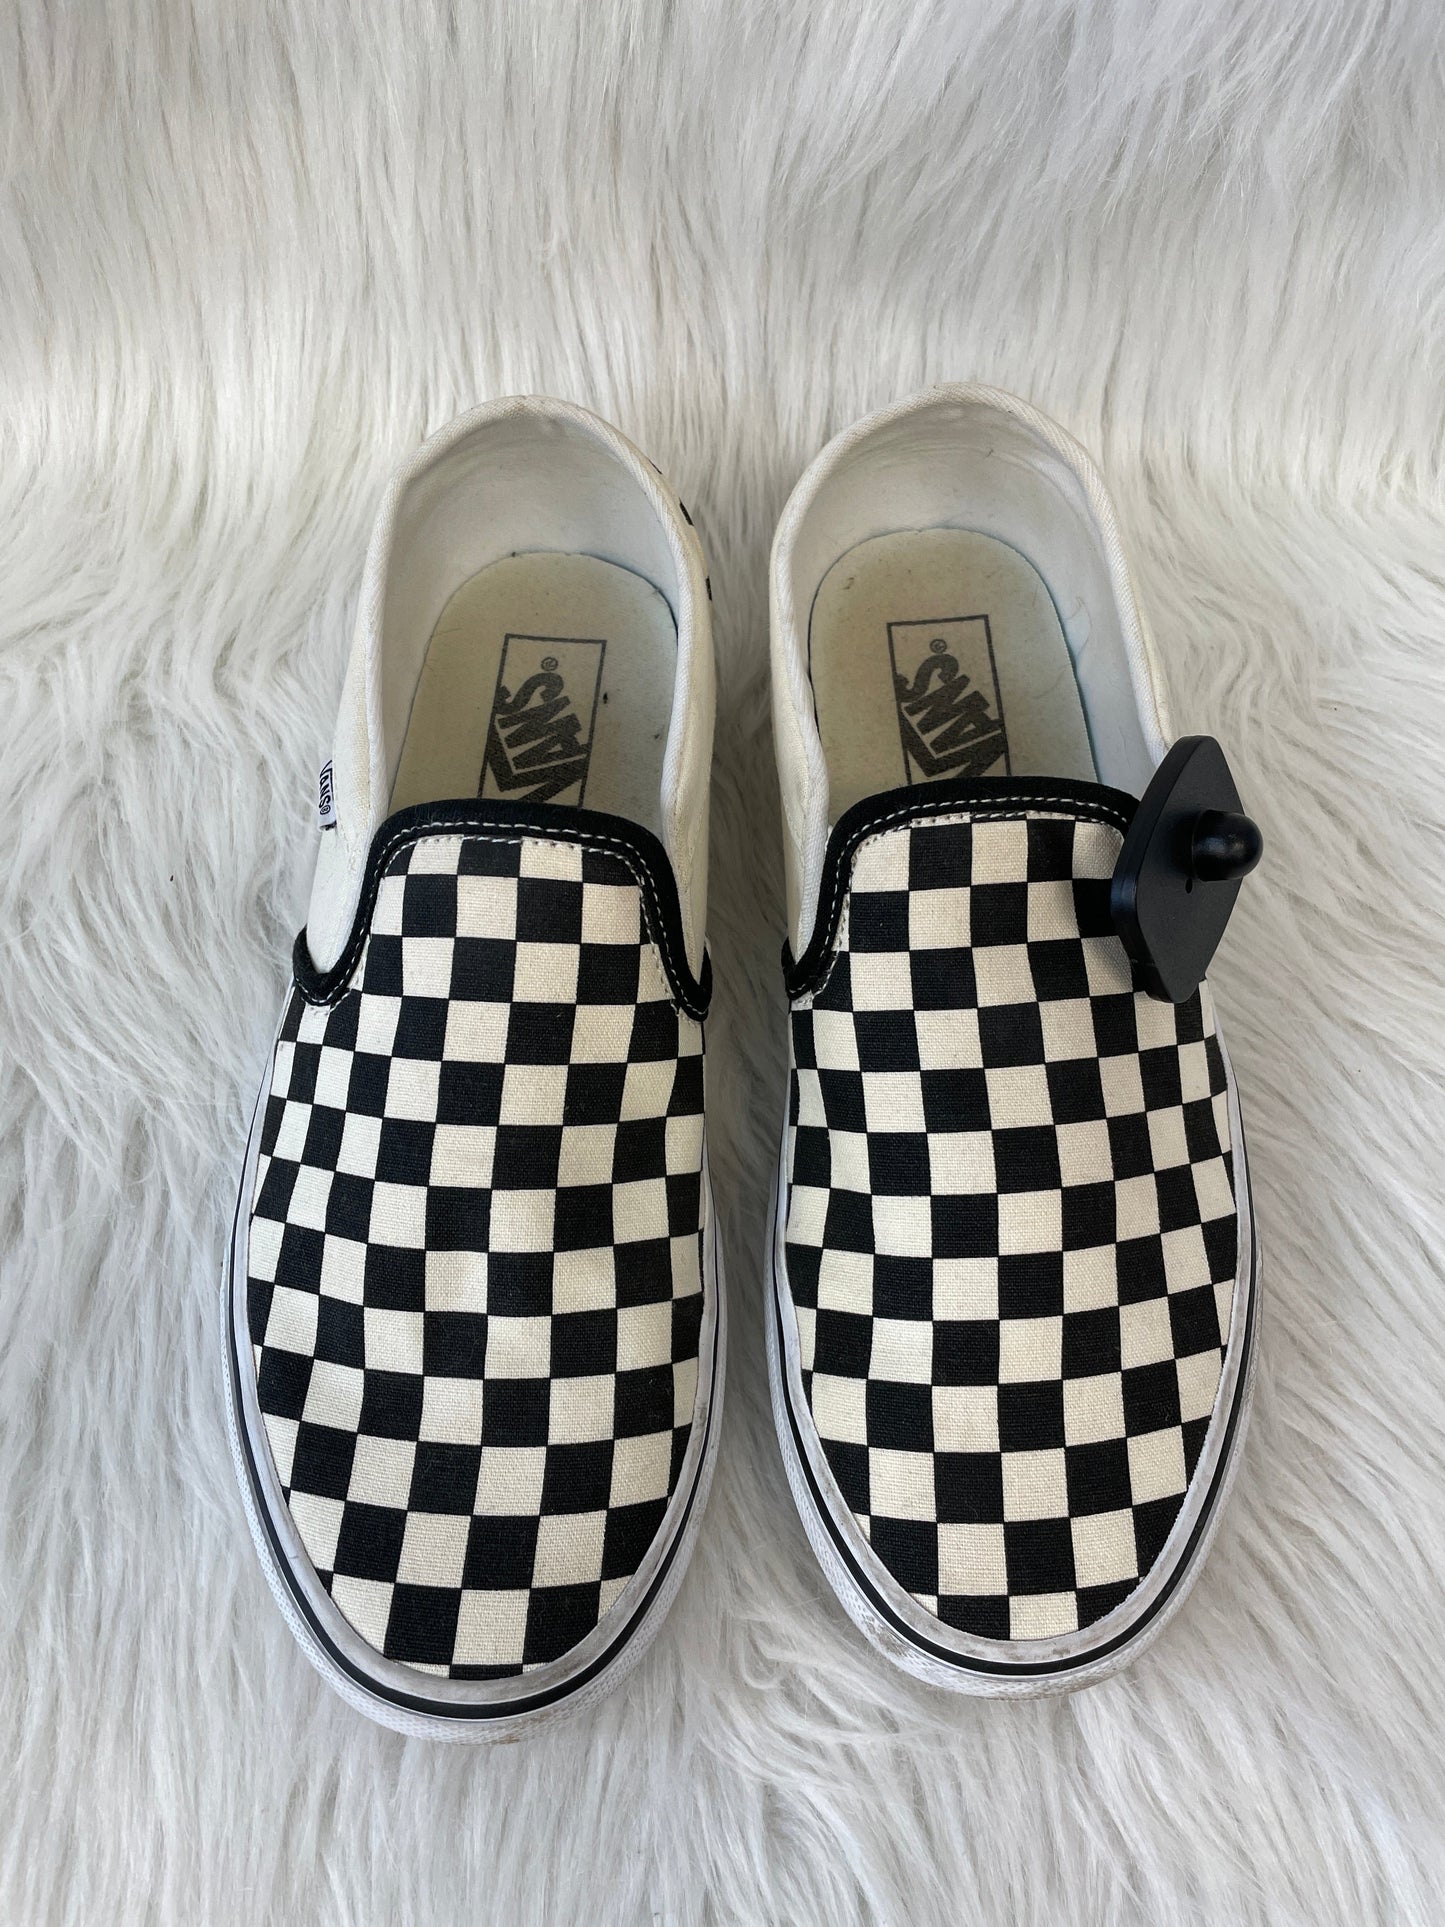 Black & White Shoes Sneakers Vans, Size 10